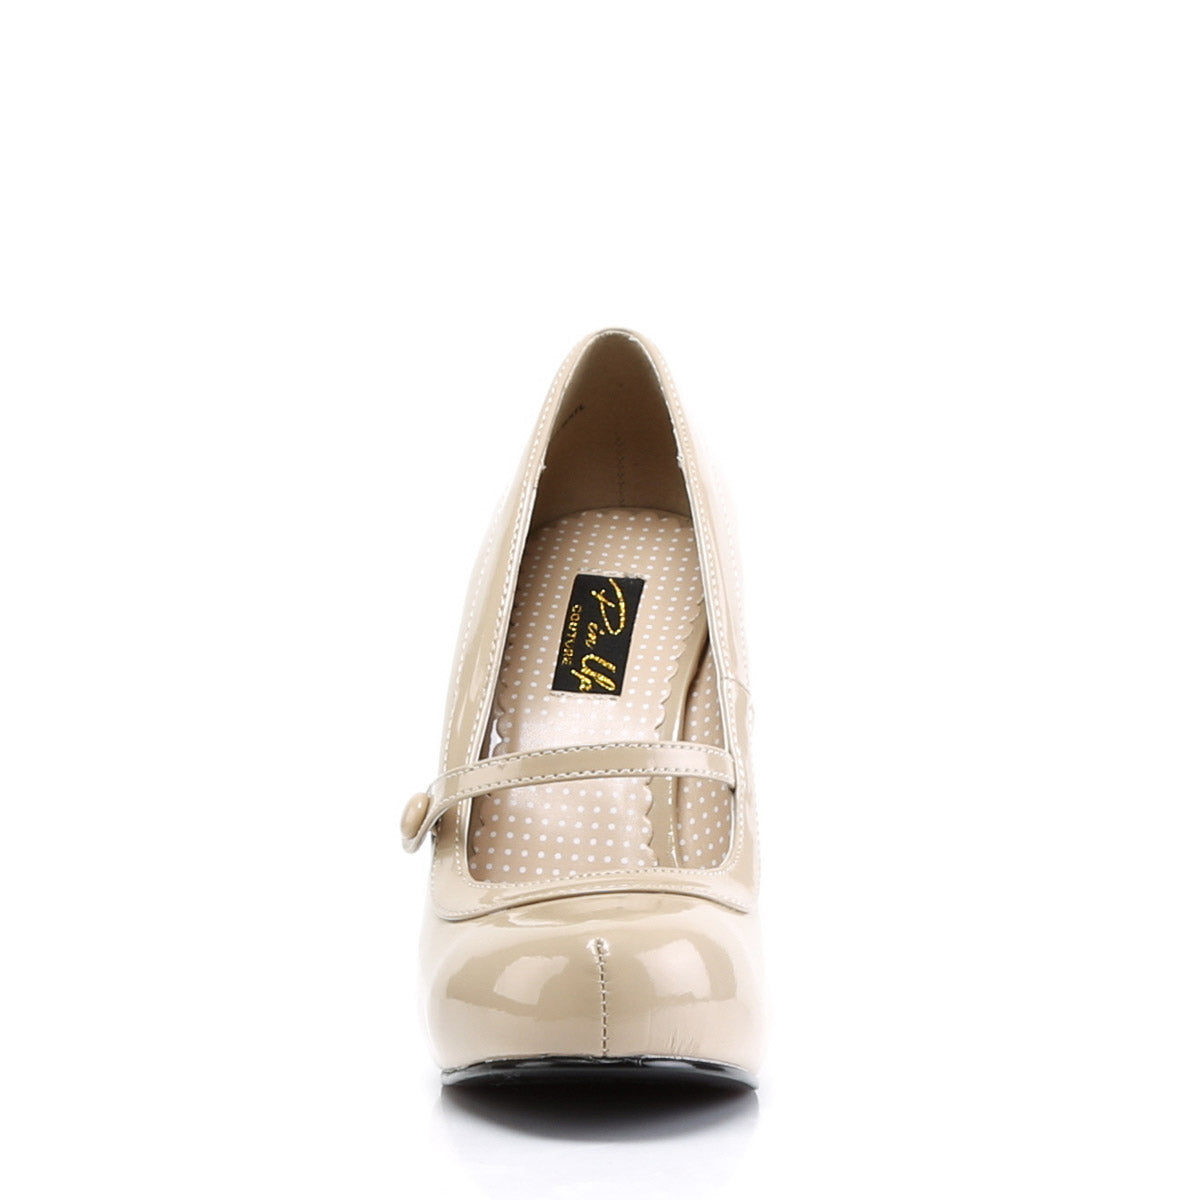 Sexy Polka Dot Lined Hidden Platform Mary Jane Pump High Heels Shoes Pleaser Pin Up Couture CUTIEPIE/02